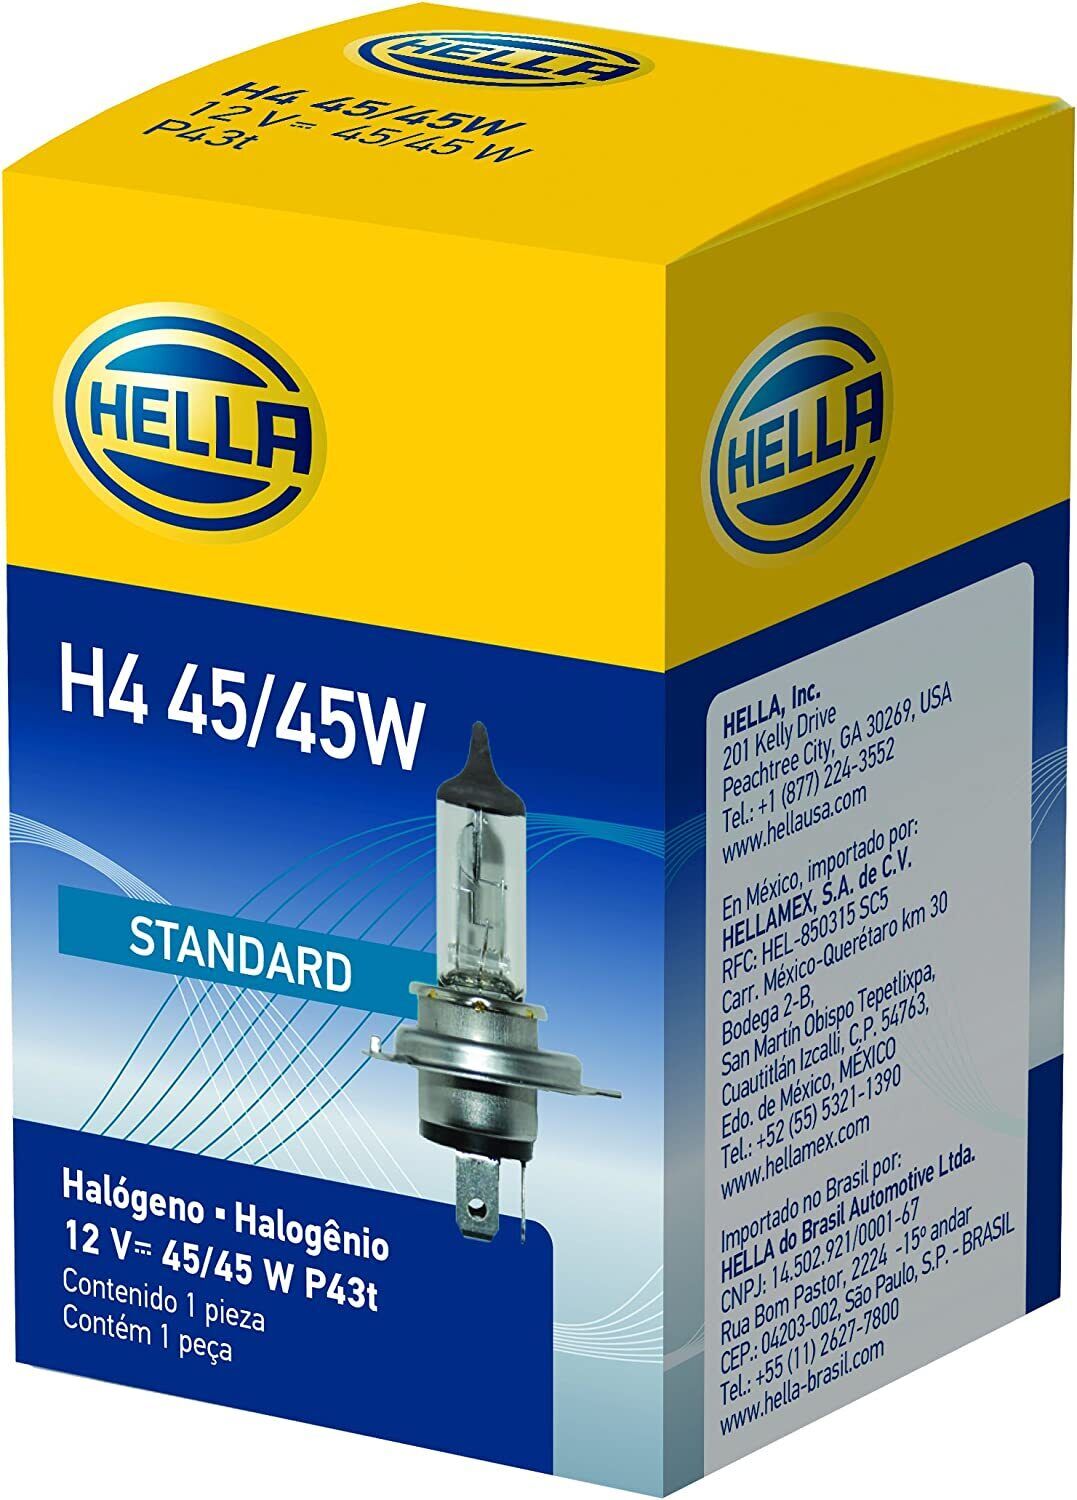 HELLA H4 45/45W Standard Halogen Bulb, 12 V